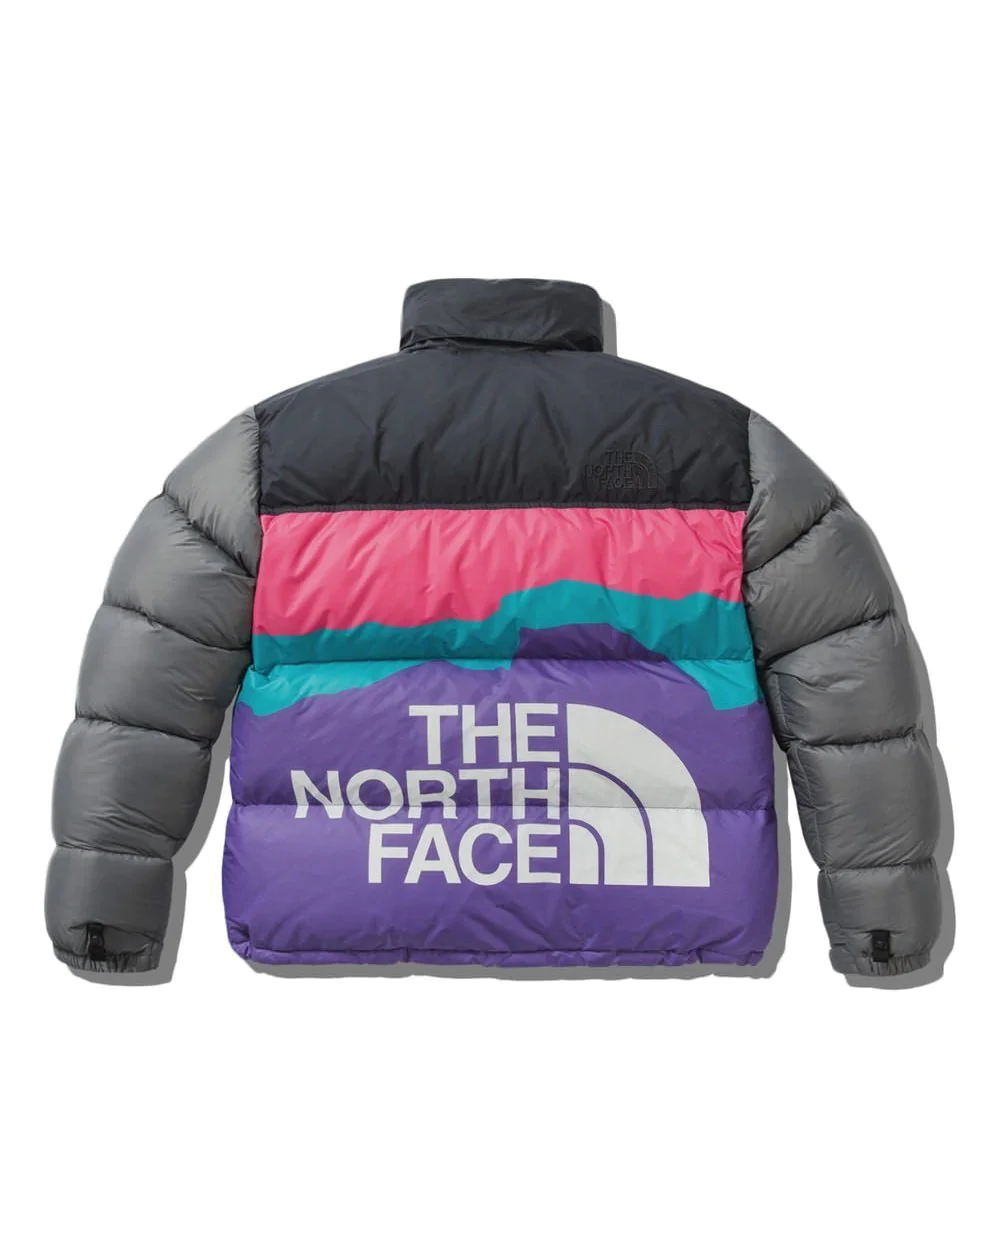 The North Face x Invincible 1996 Retro Nuptse Jacket